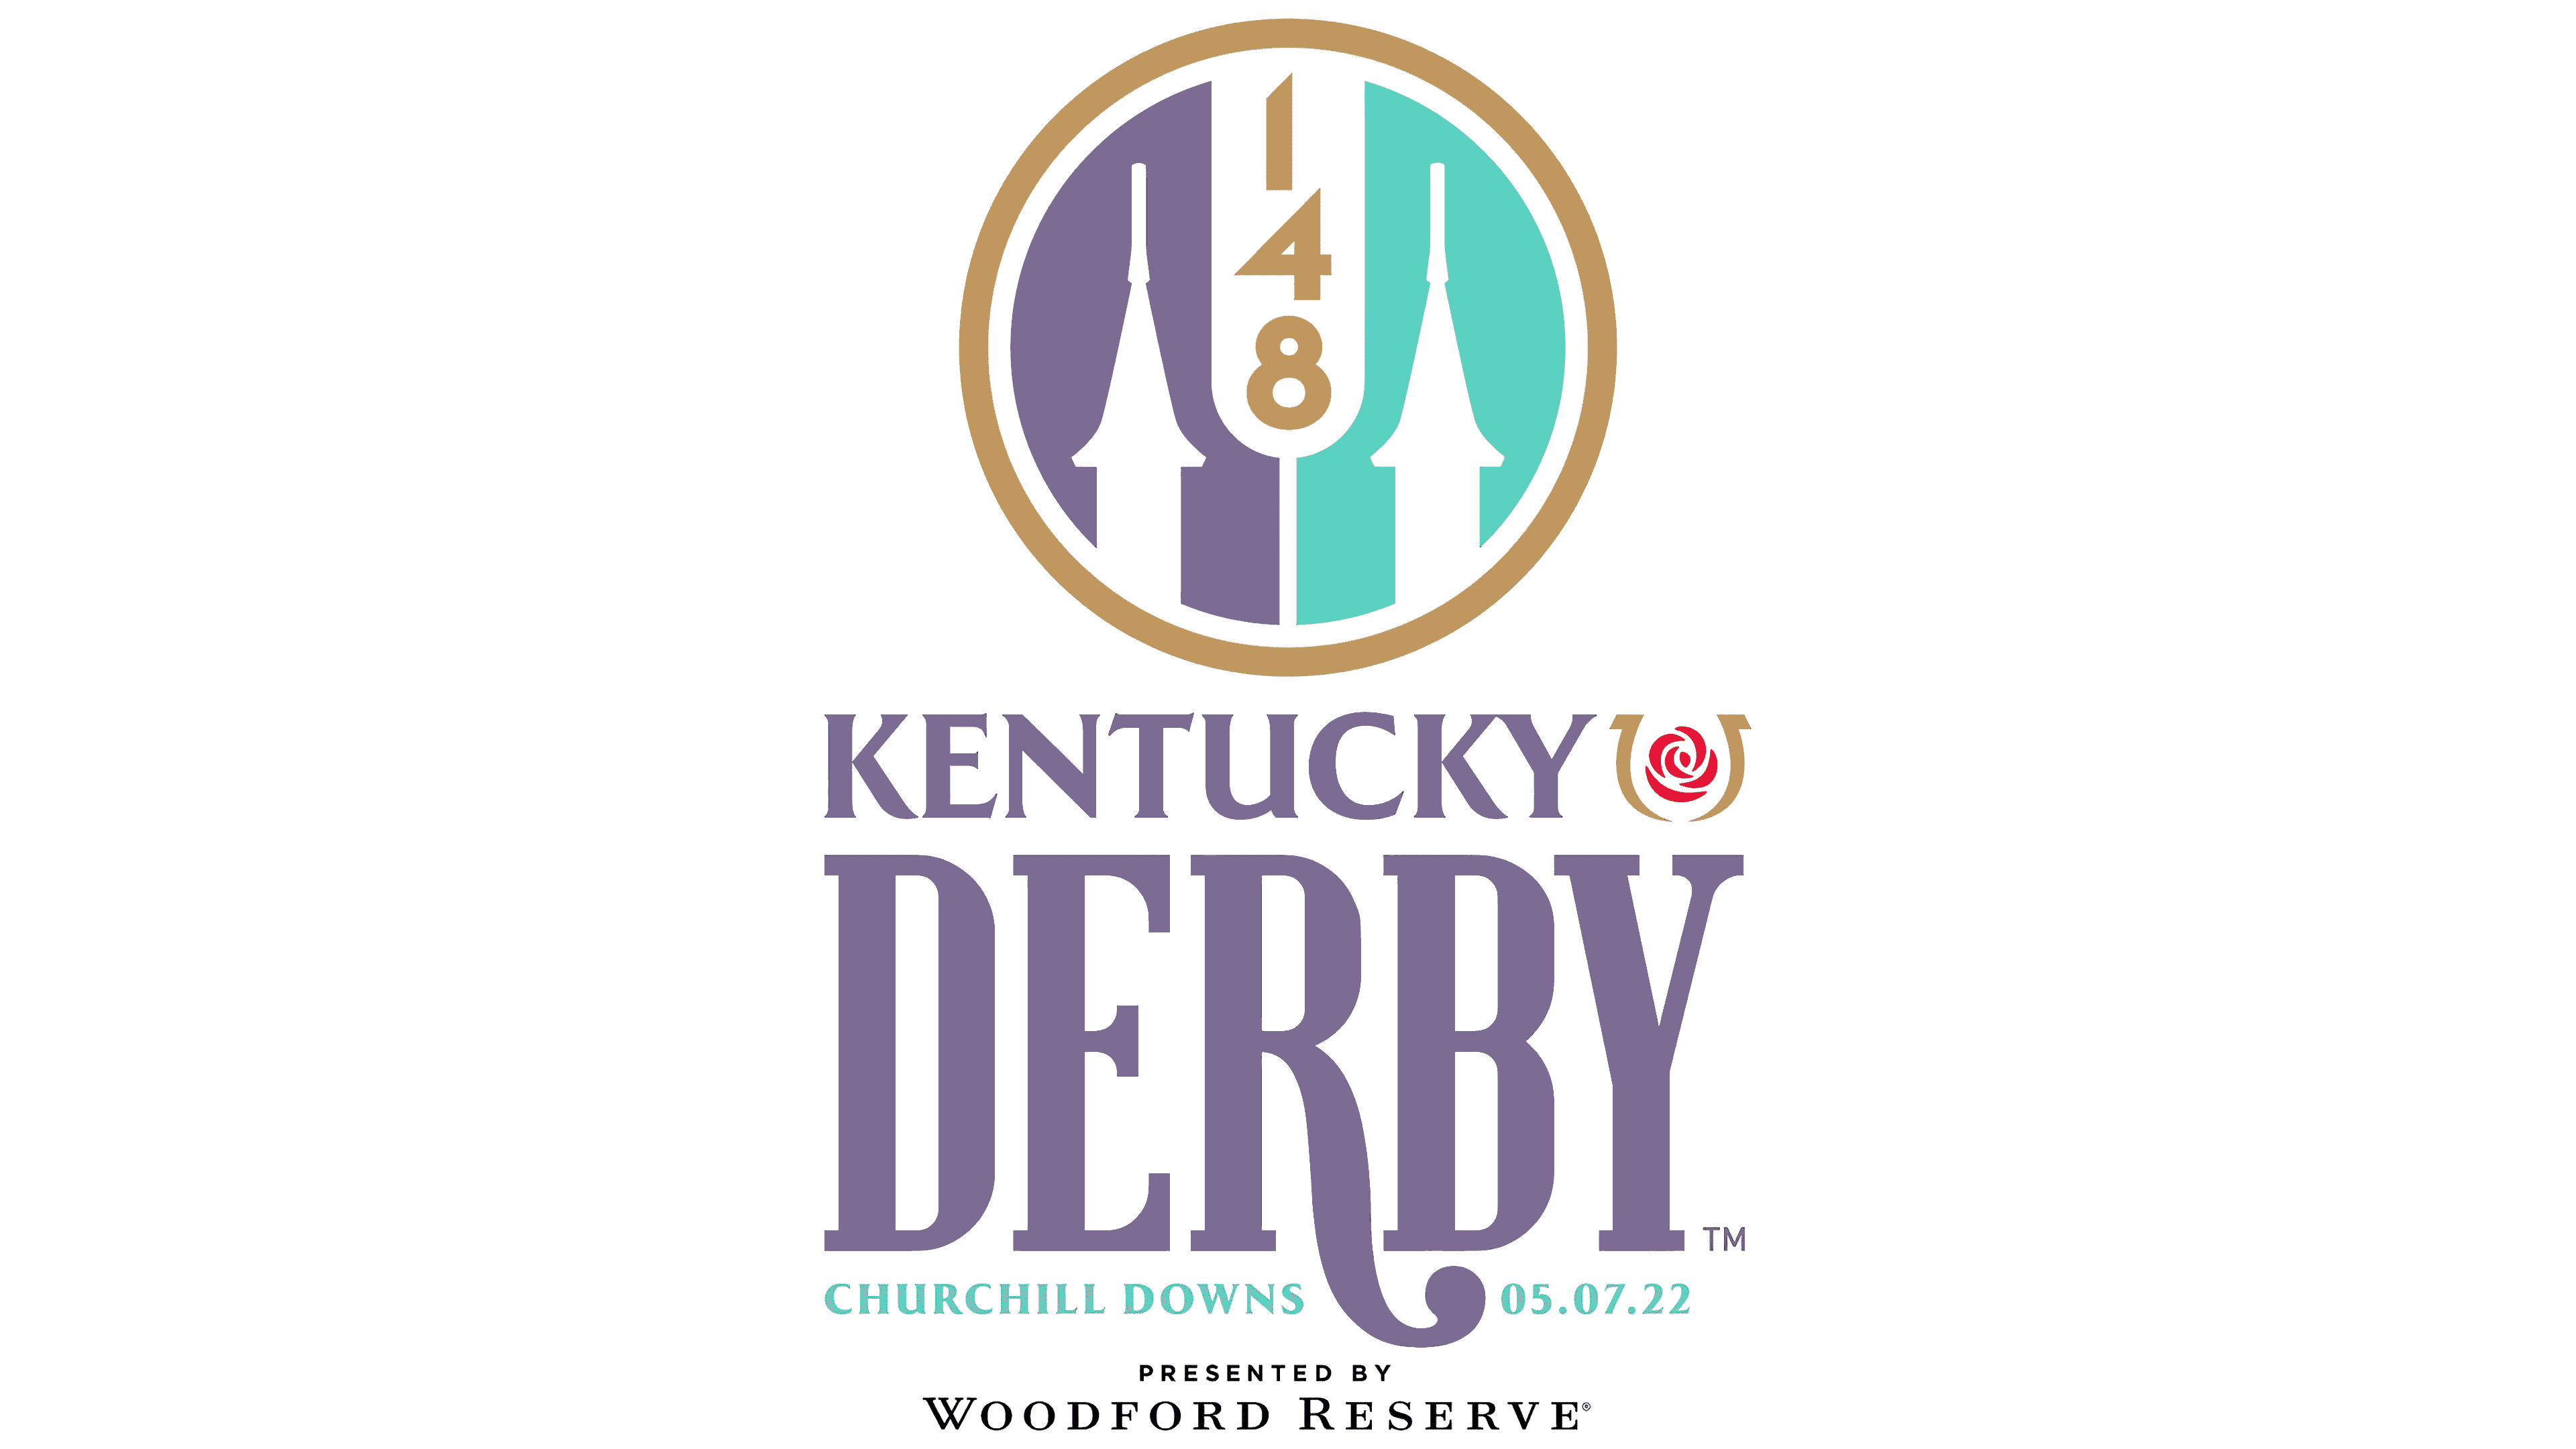 New Kentucky Derby logo introduced